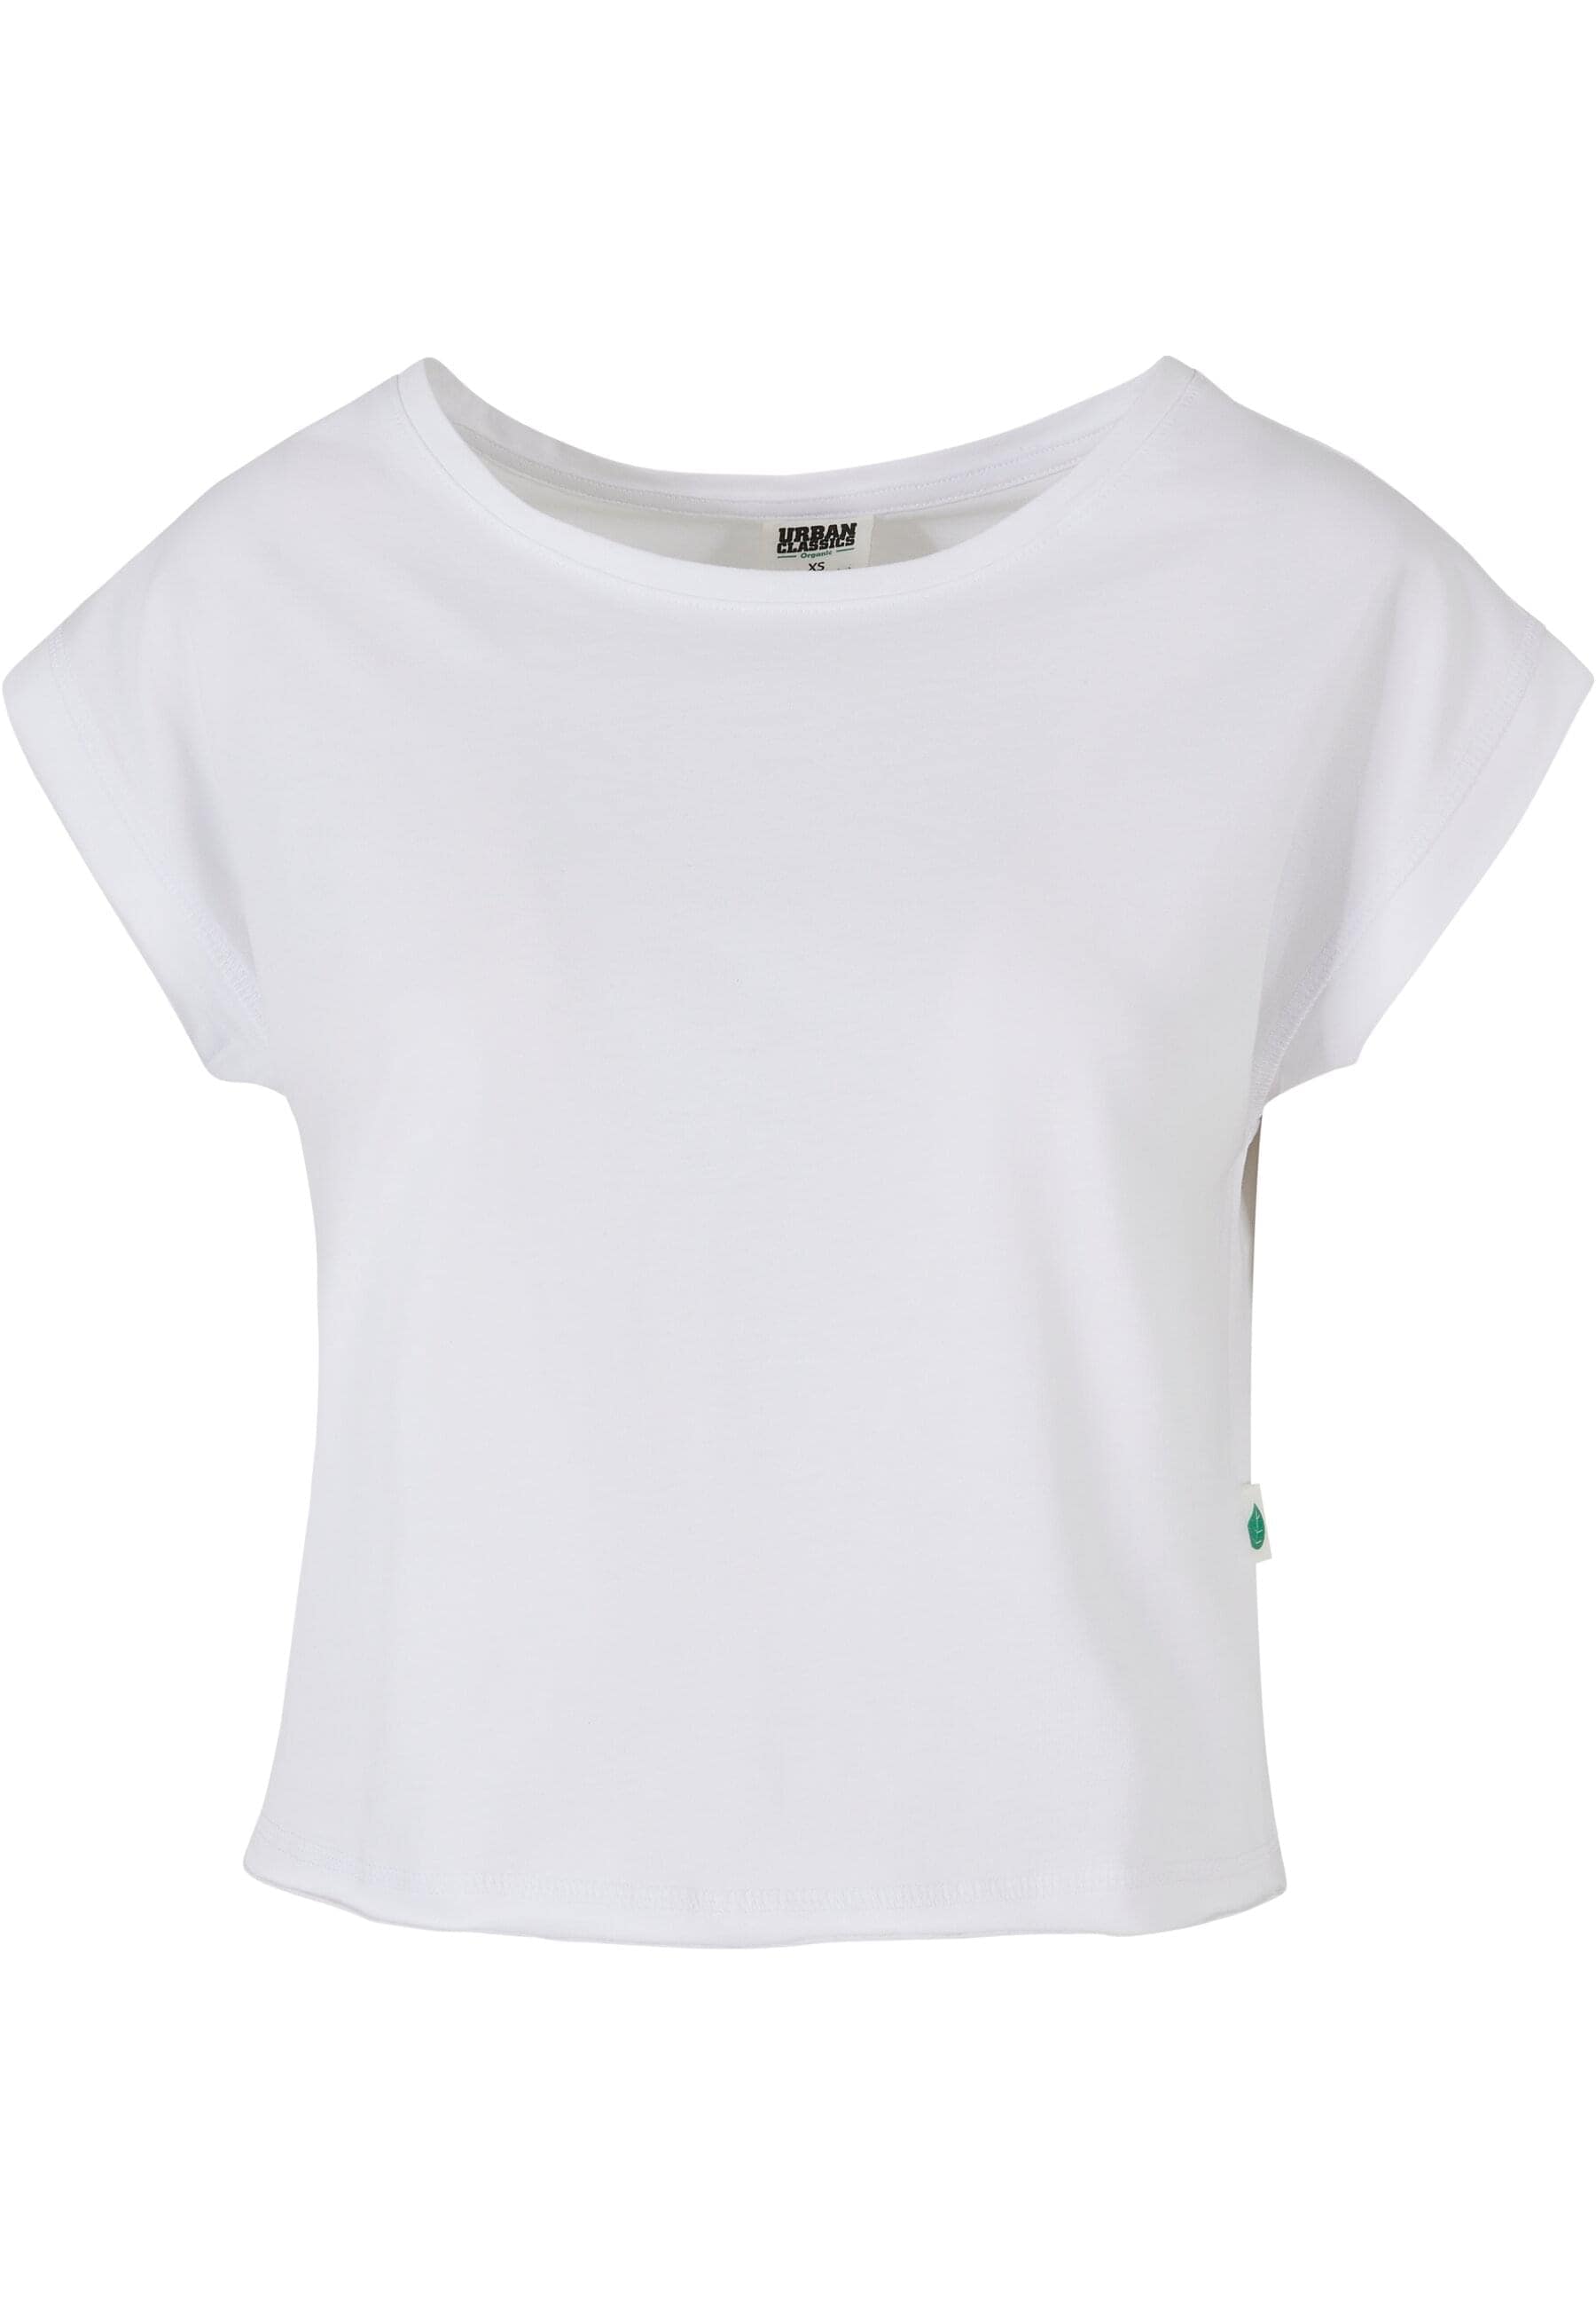 Tee«, Edge BAUR Ladies (1 »Damen URBAN tlg.) T-Shirt kaufen | CLASSICS für Open Organic